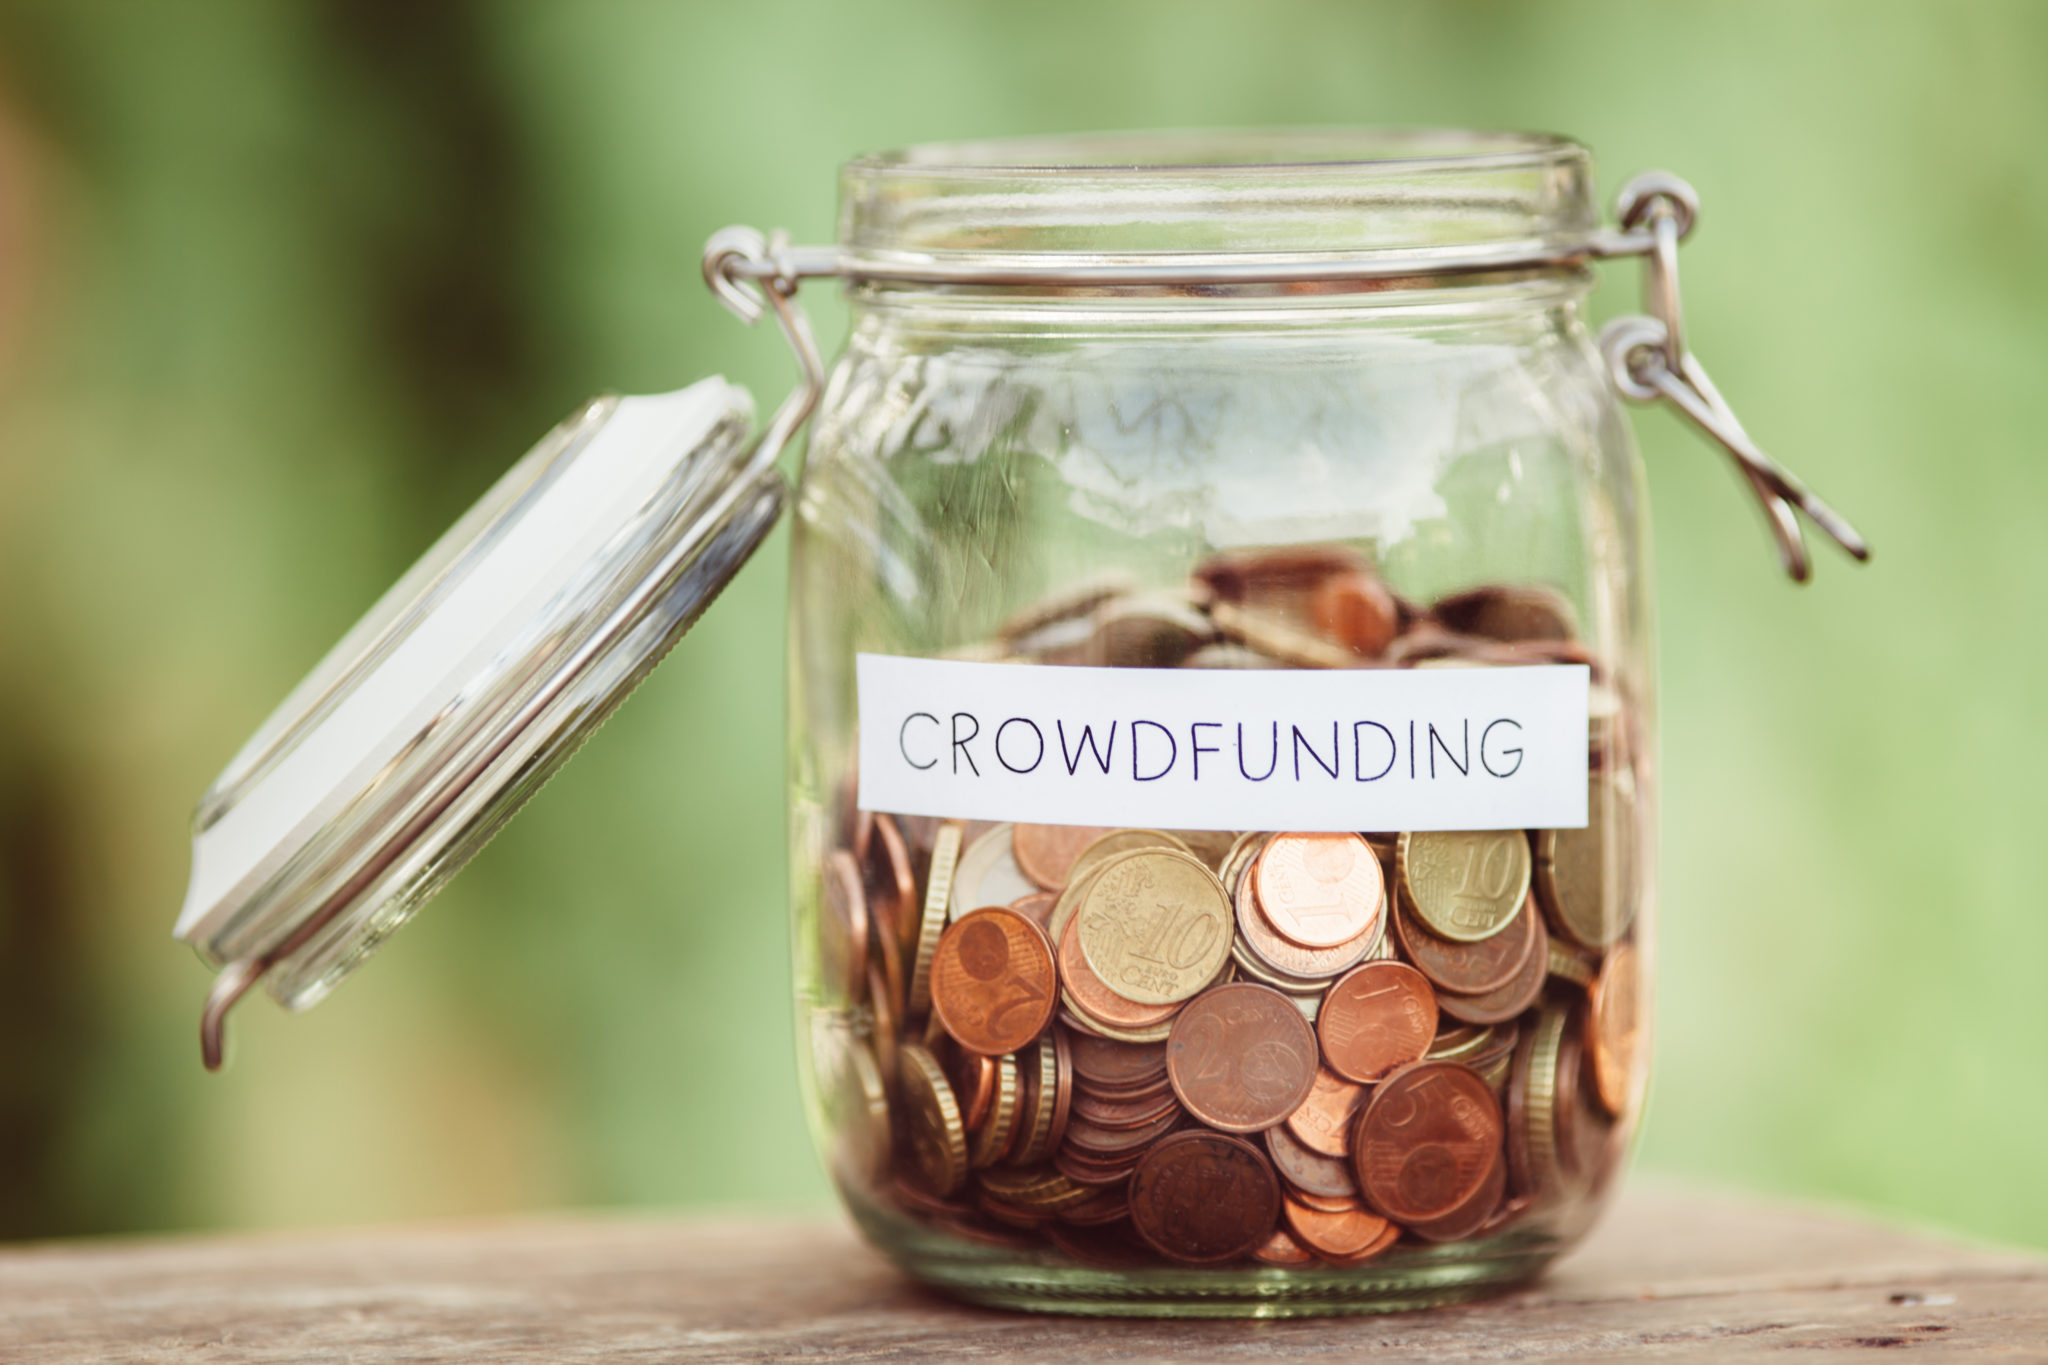 Crowdfunding money jar image Image